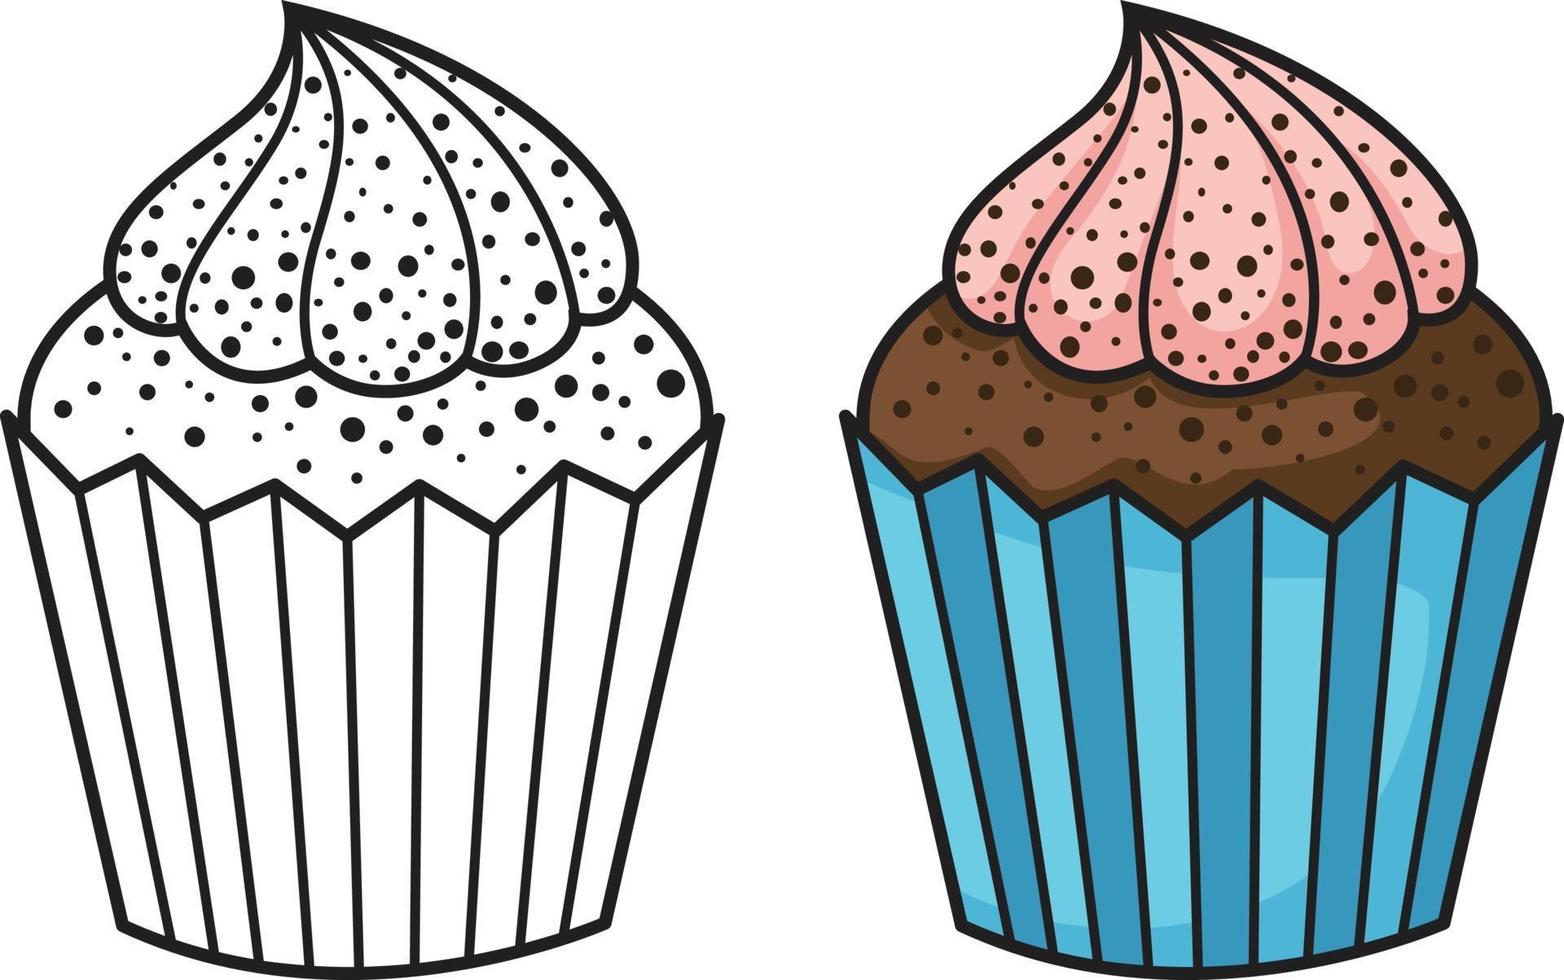 vetor de dois cupcakes